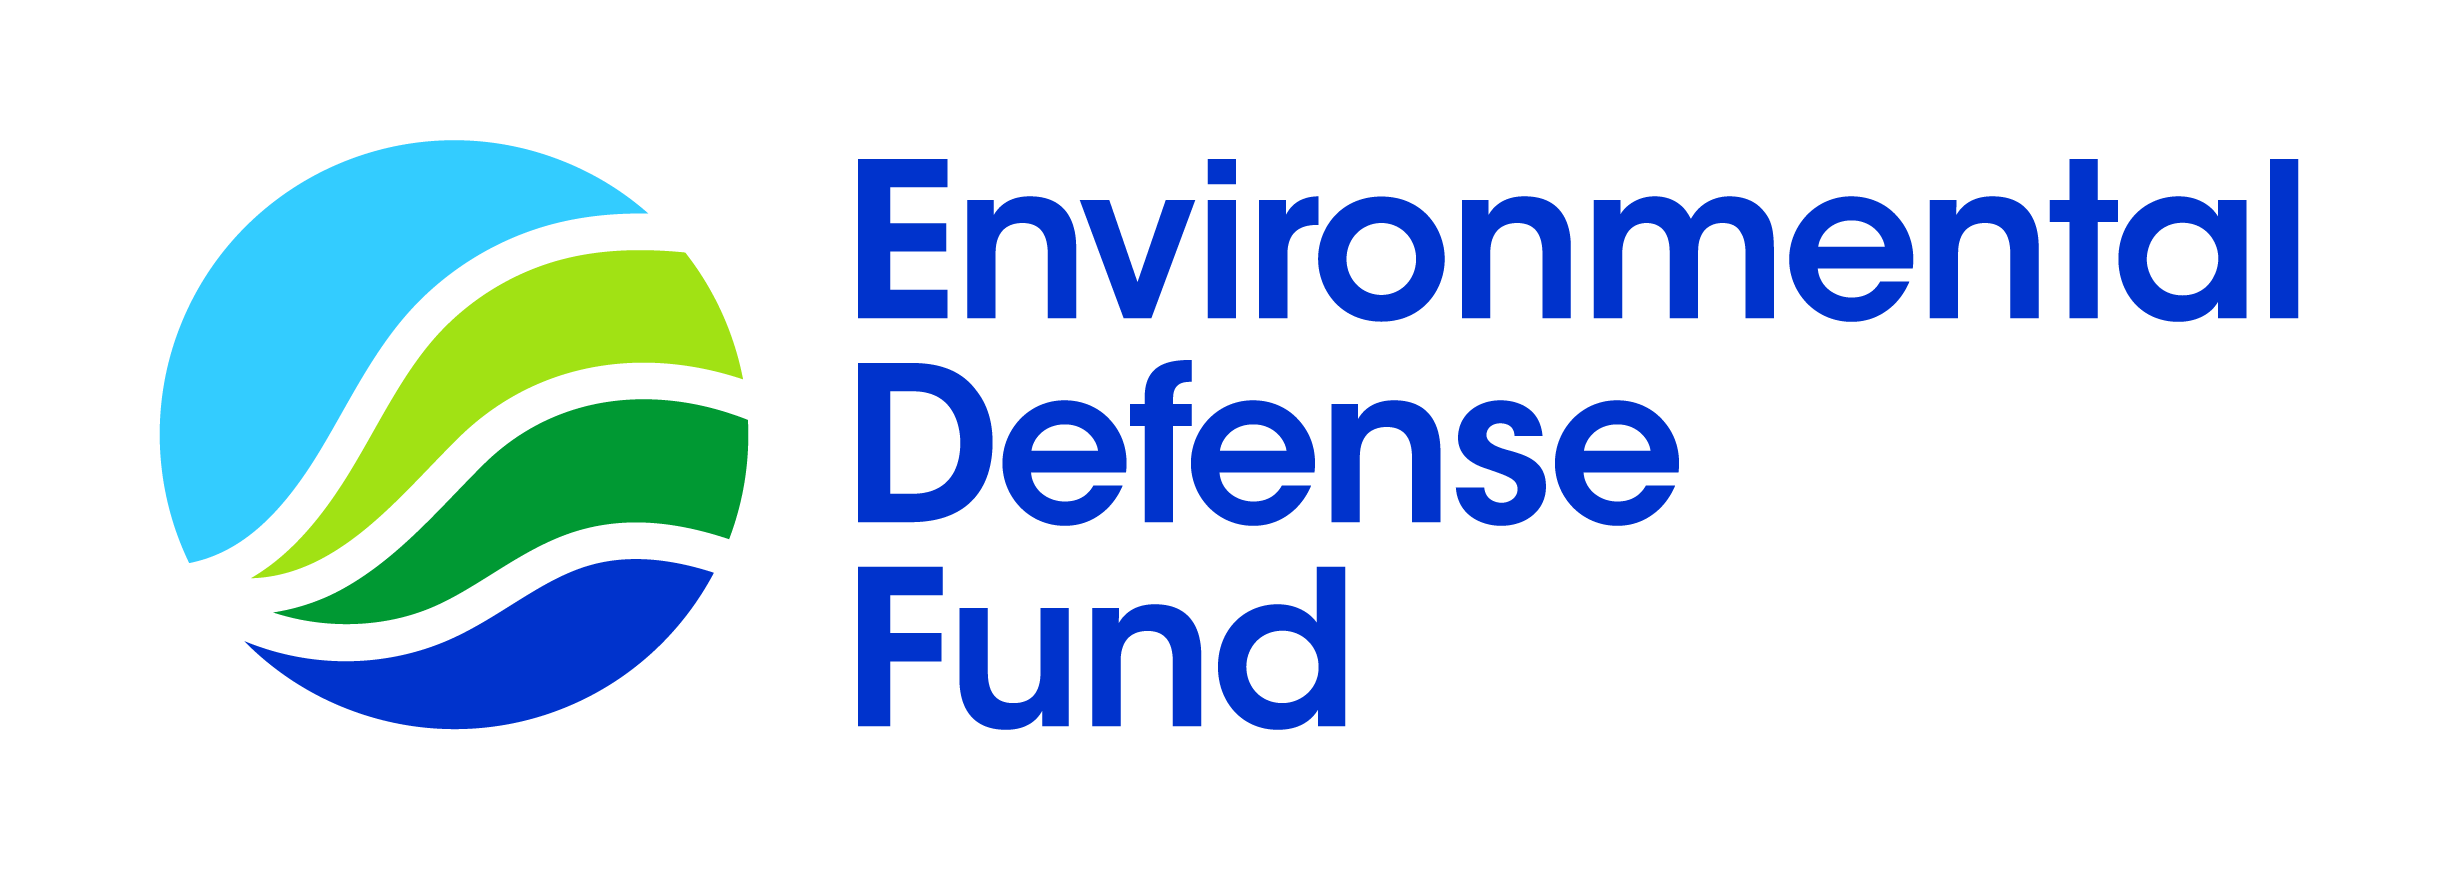 Environmental Defense Fund seeks Fellow